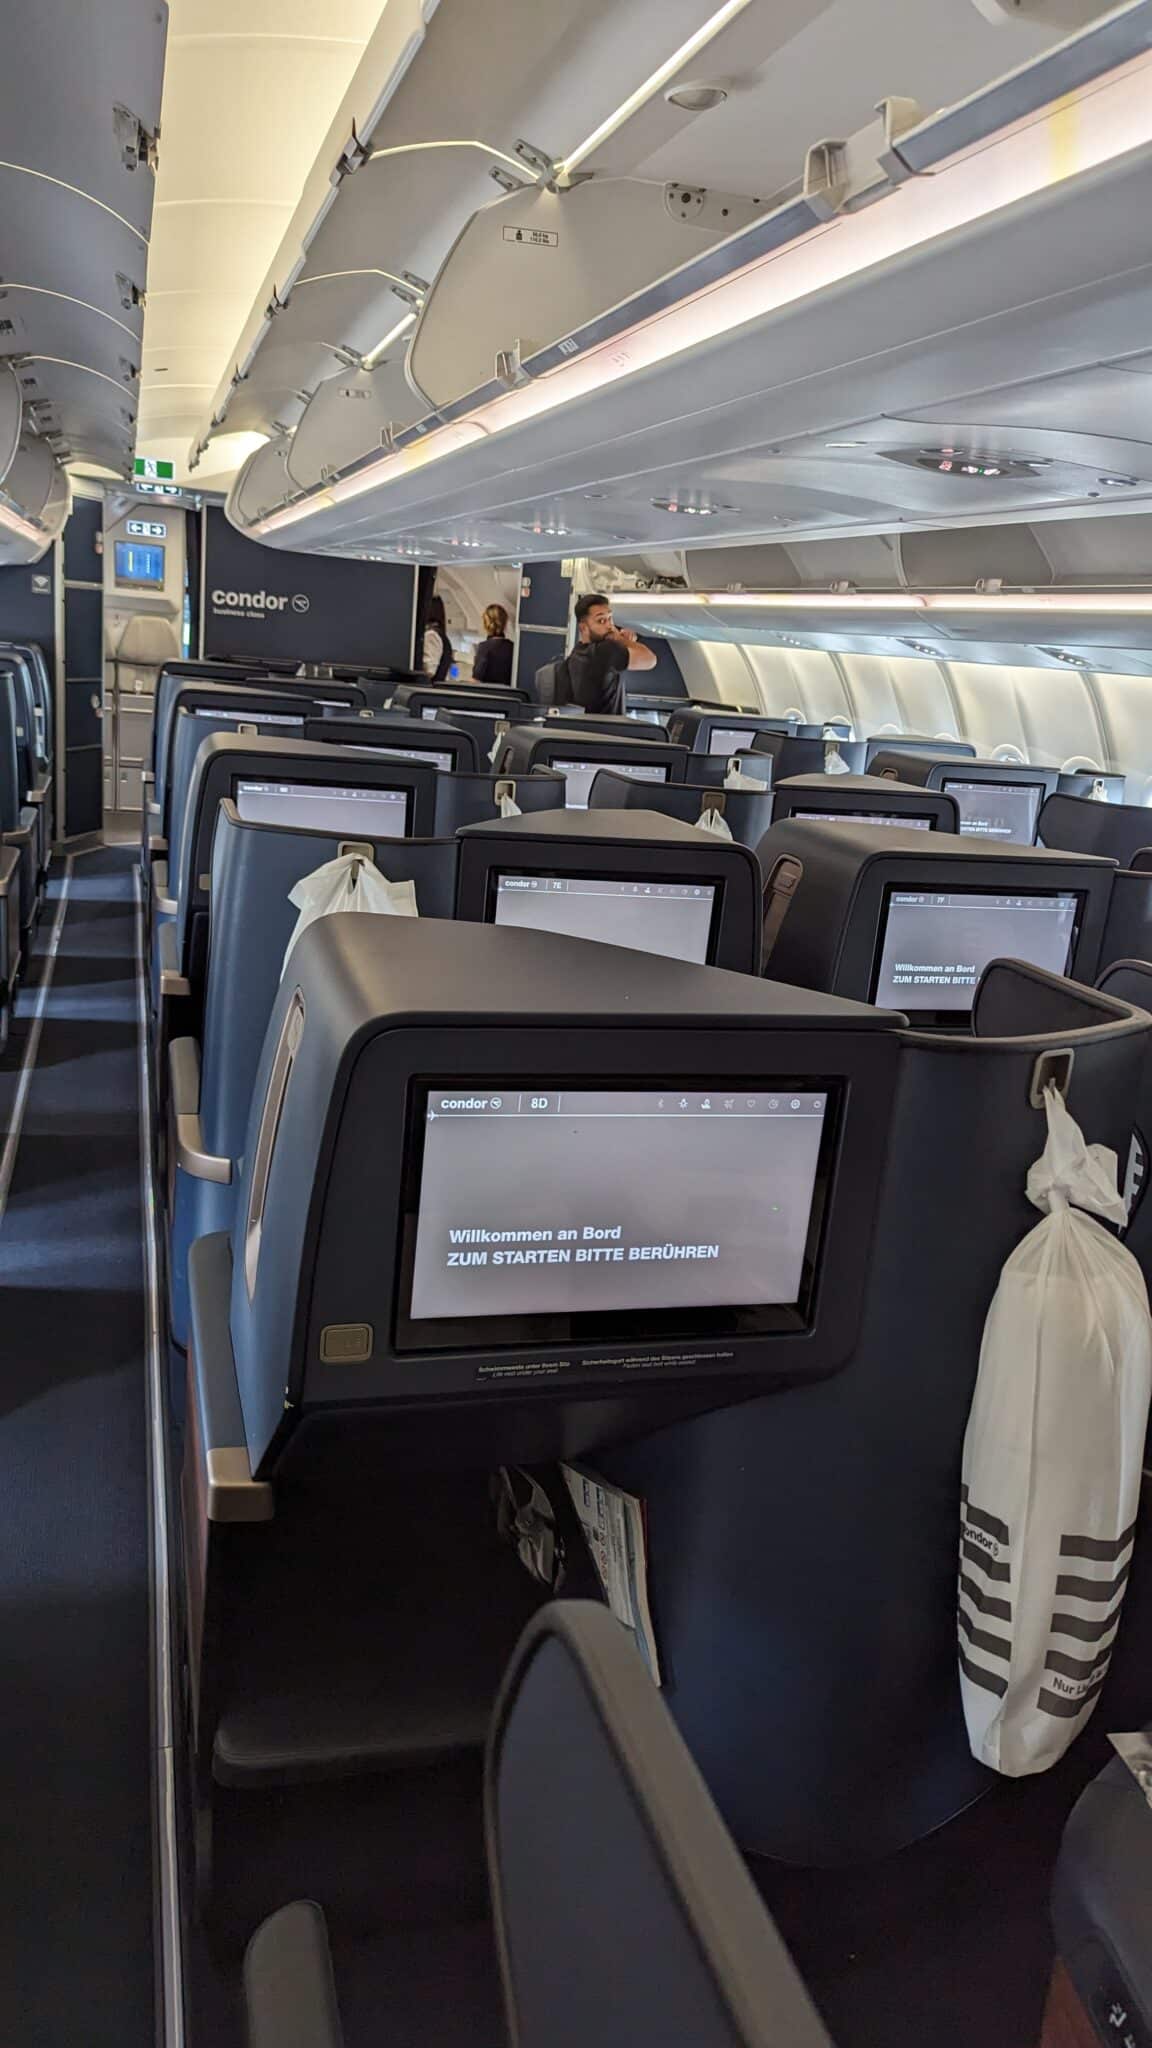 Condor Business class seat